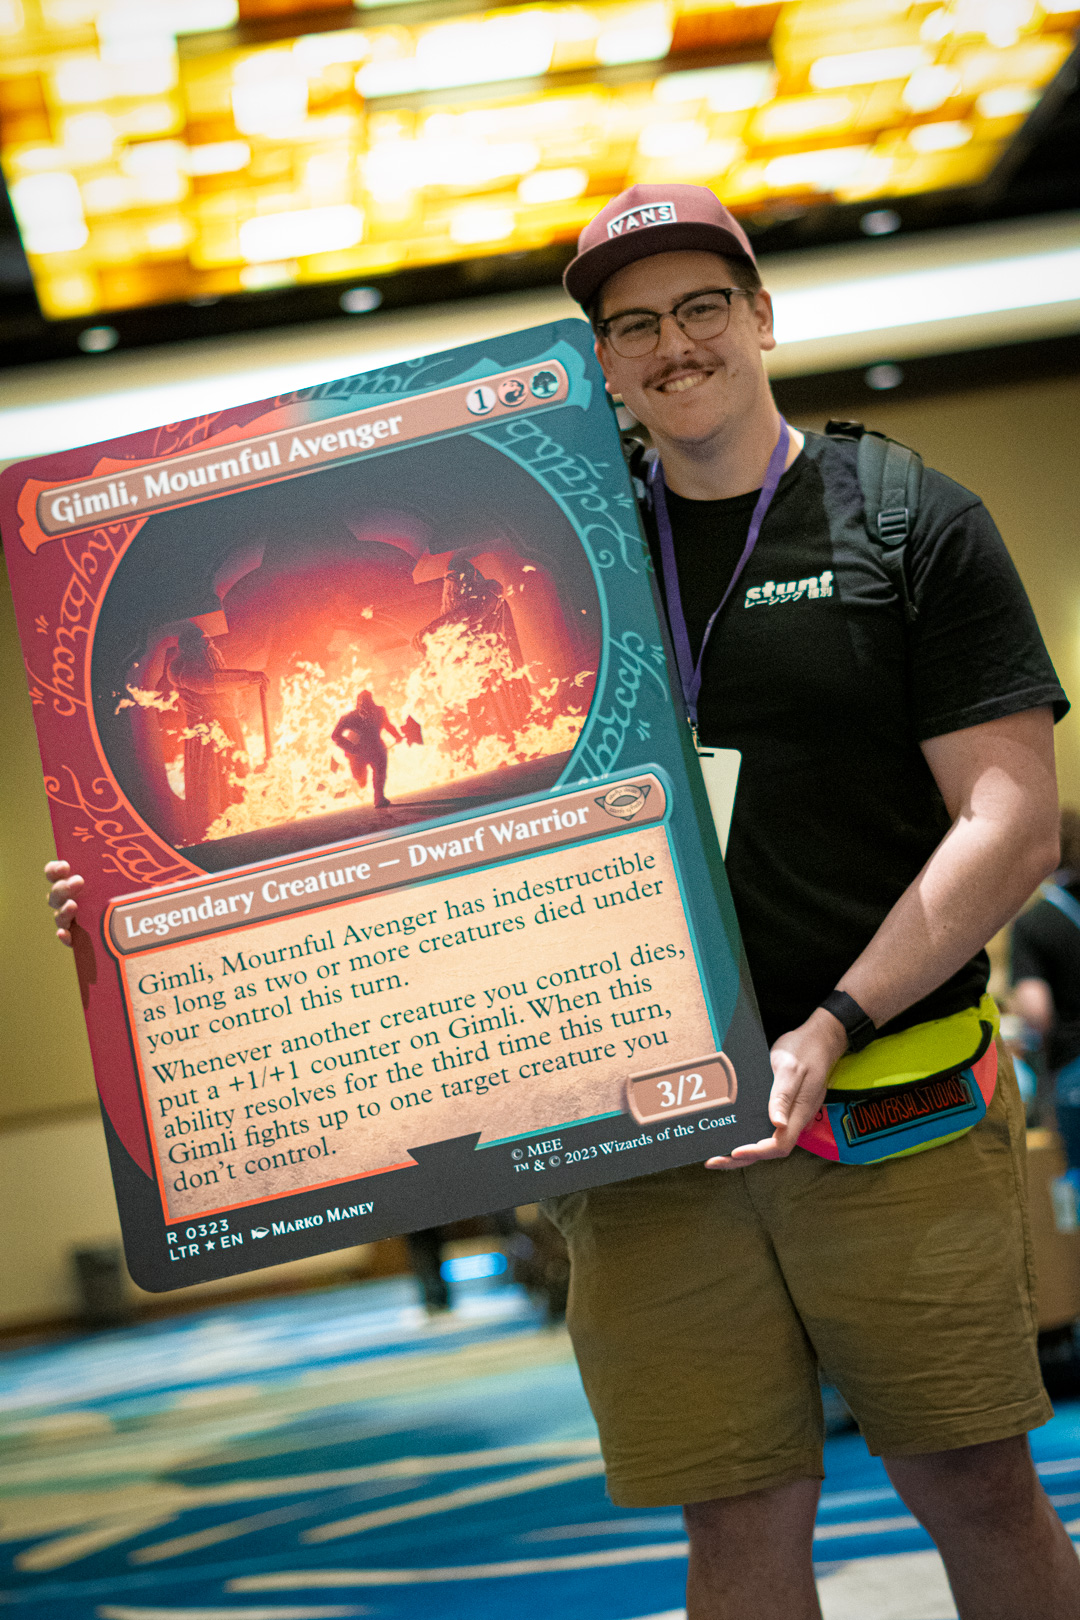 Player holding an oversized card of Gimli, Mournful Avenger